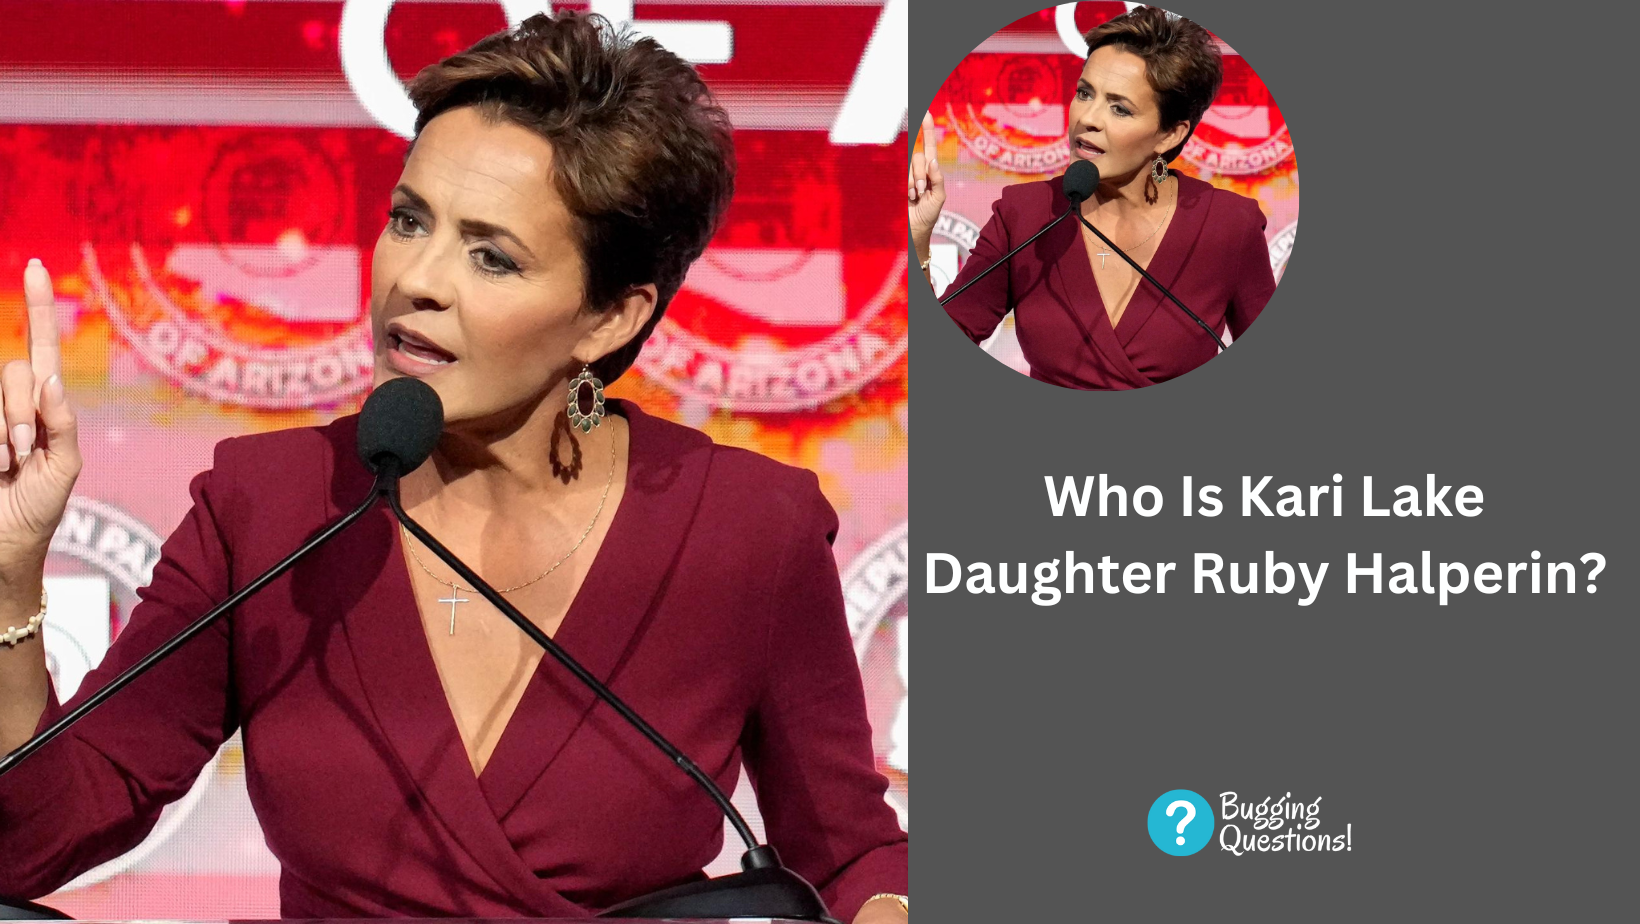 Who Is Kari Lake Daughter Ruby Halperin?